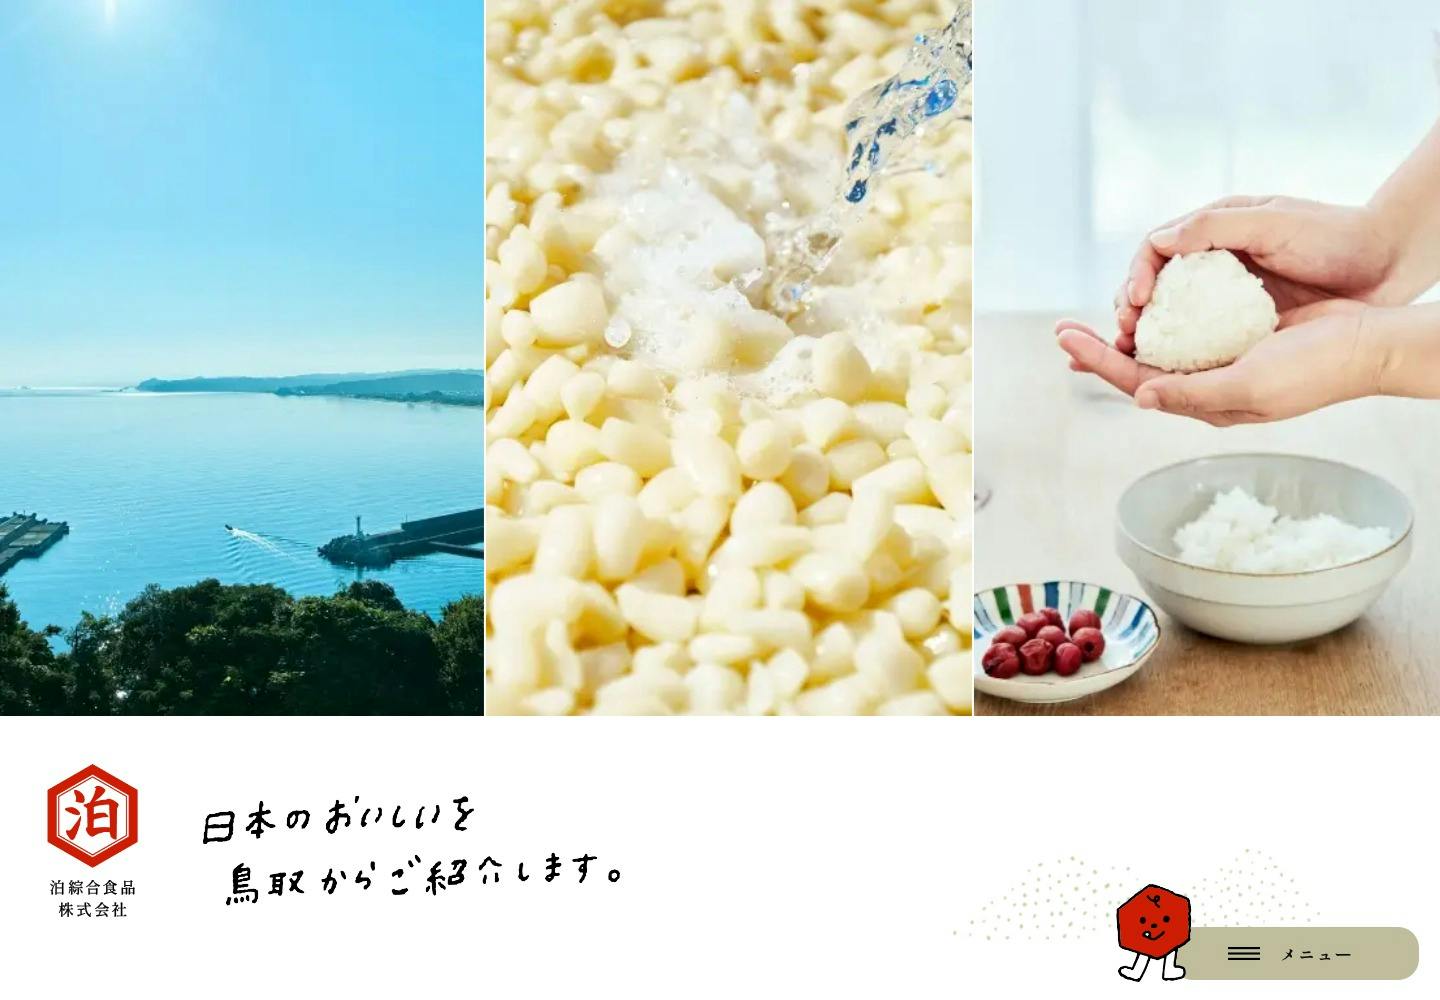 Cover Image for 泊綜合食品株式会社 | 日本のおいしいを鳥取から紹介する食品卸会社